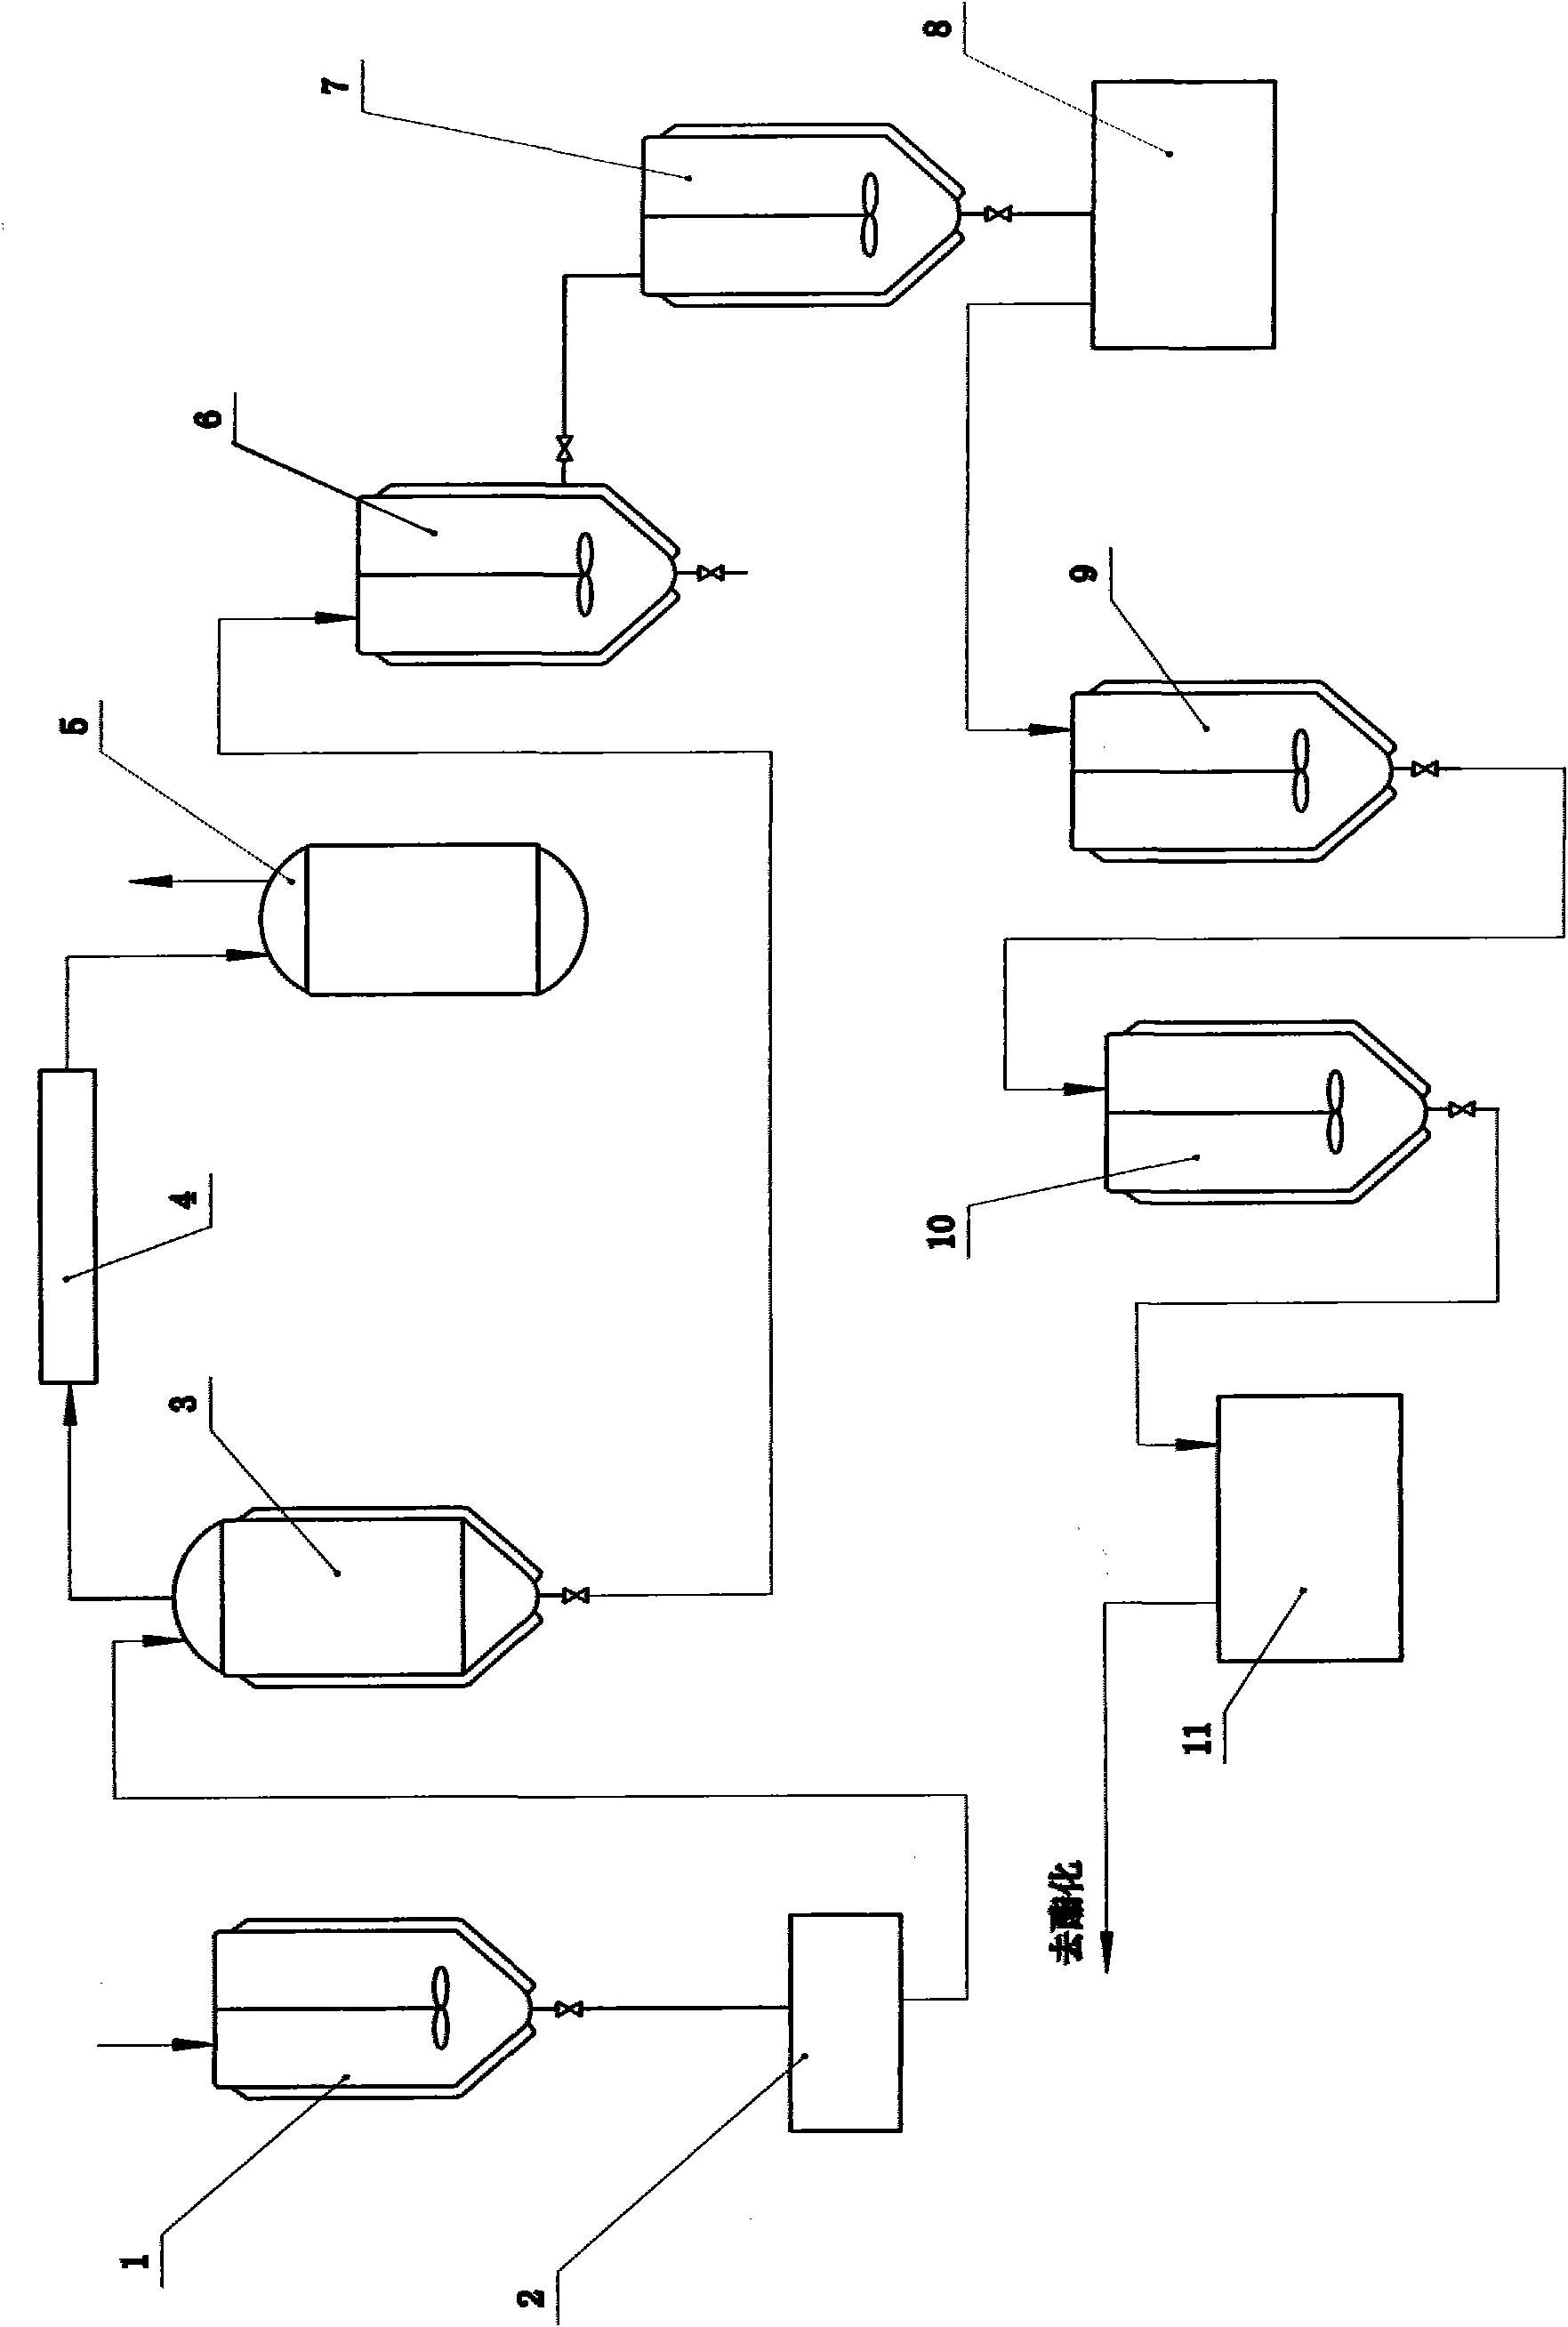 Method for producing amino-phenyl-beta-hydroxyethyl sulfone sulfate